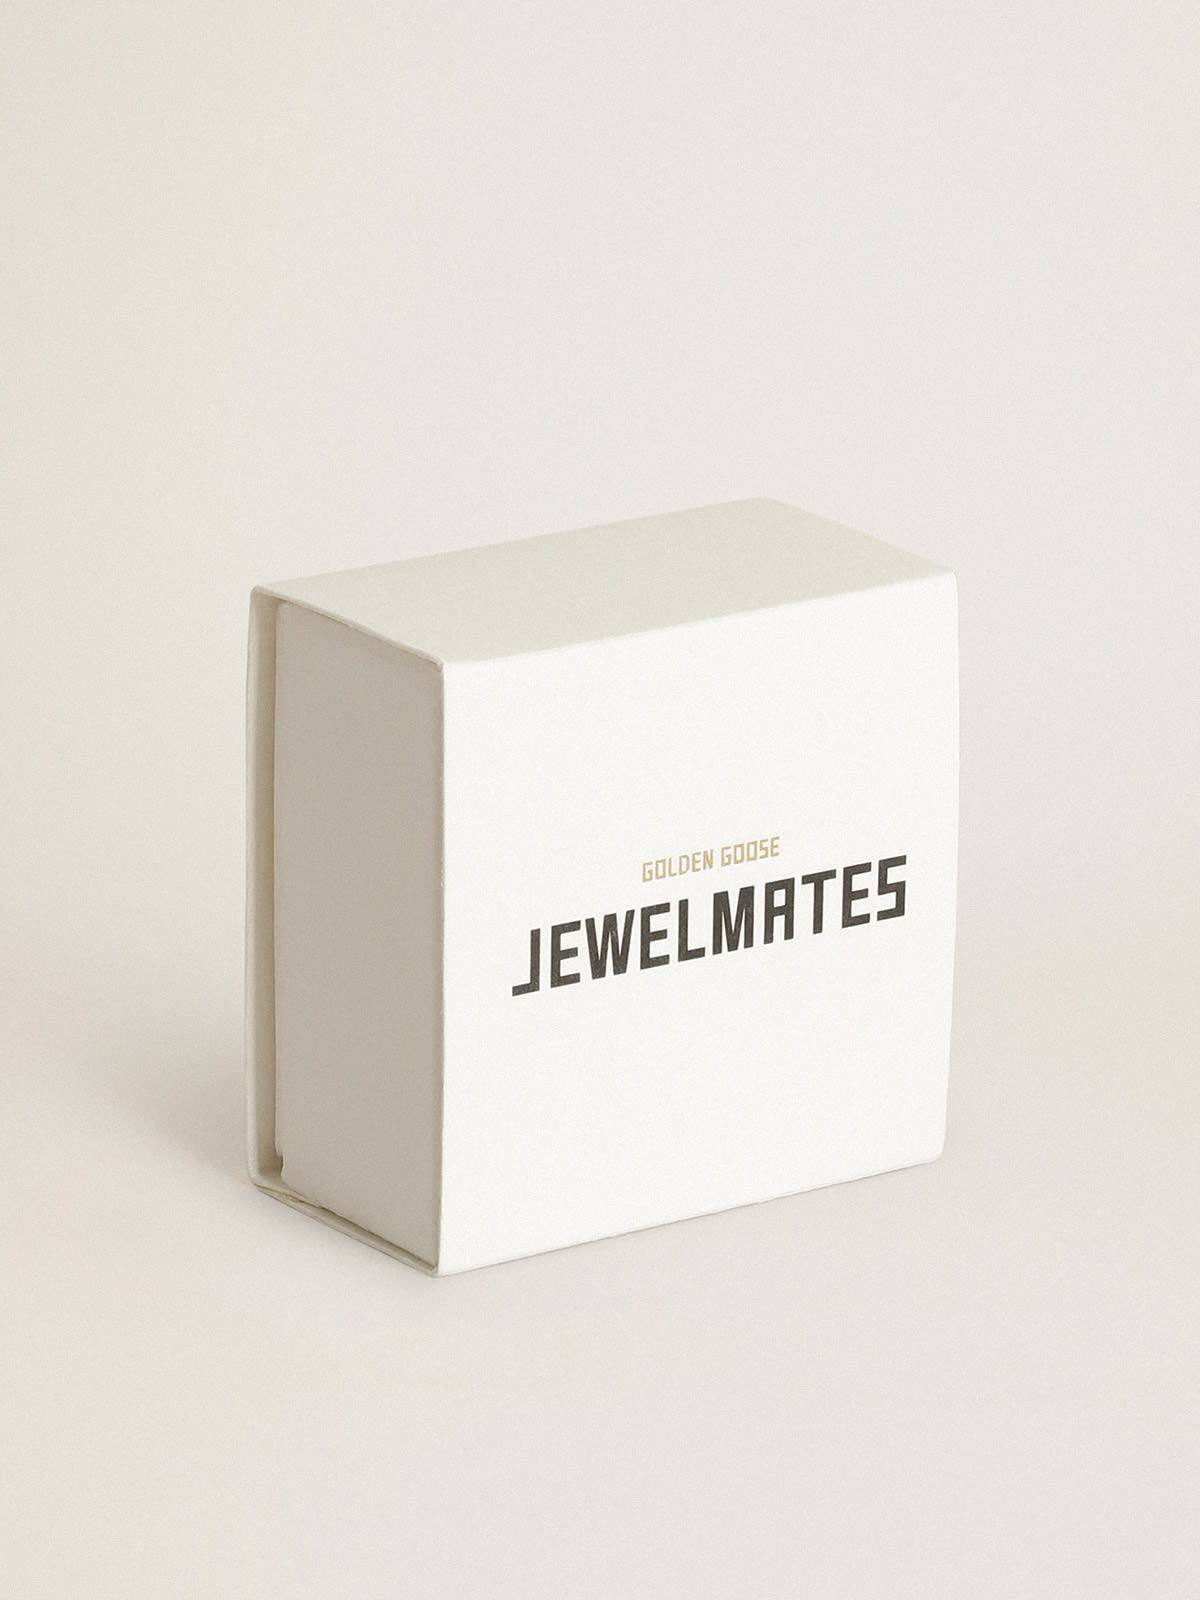 Golden Goose - Fermoirs clips pour lacets Collection Timeless Jewelmates couleur or ancien avec inscription Golden in 